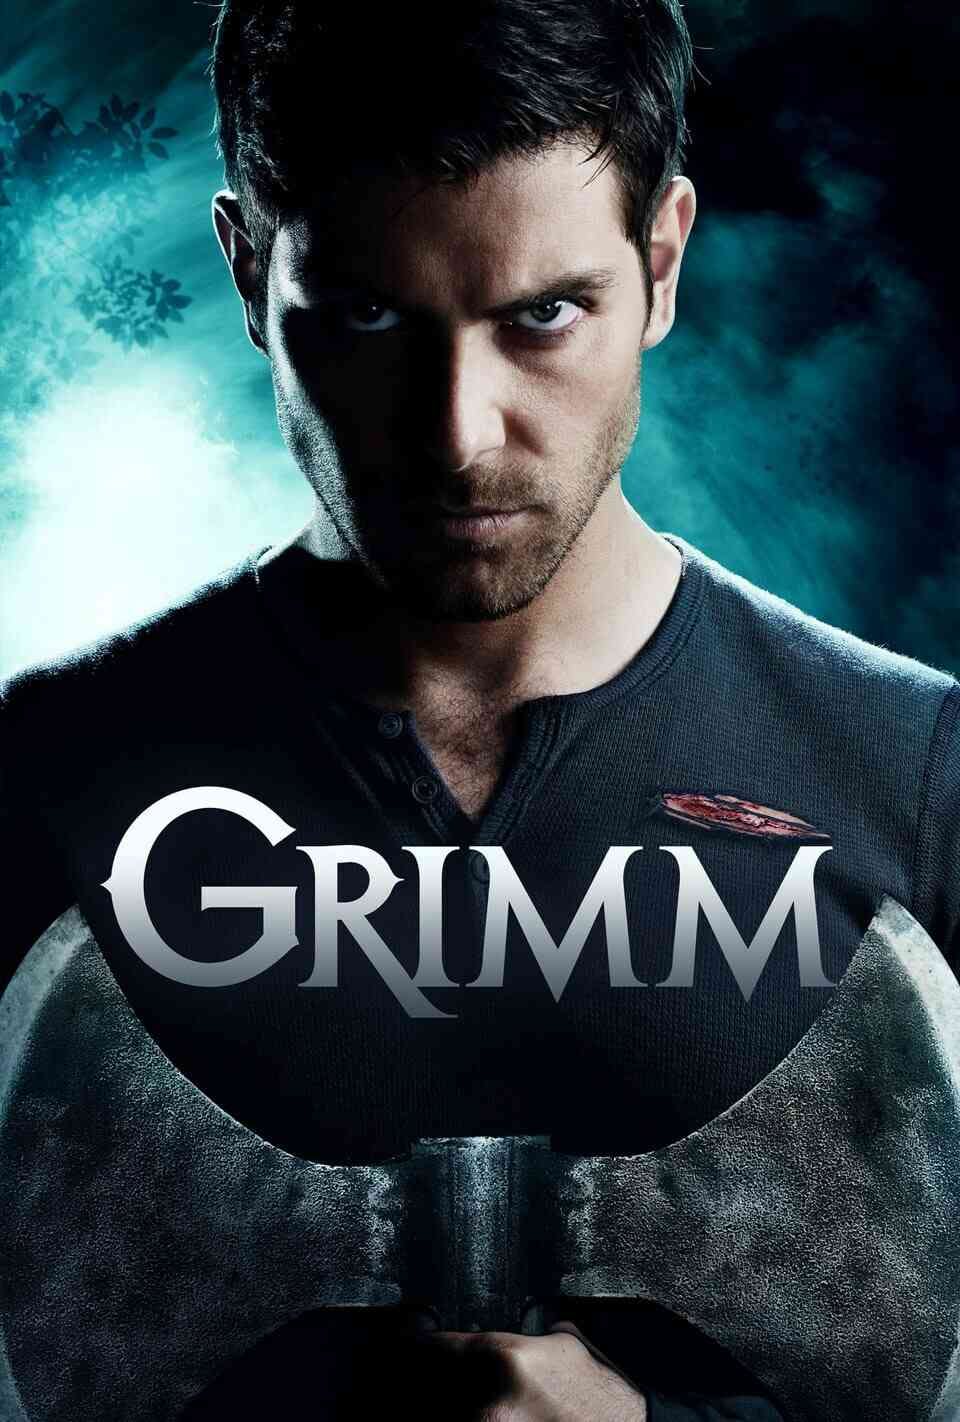 Read Grimm screenplay.